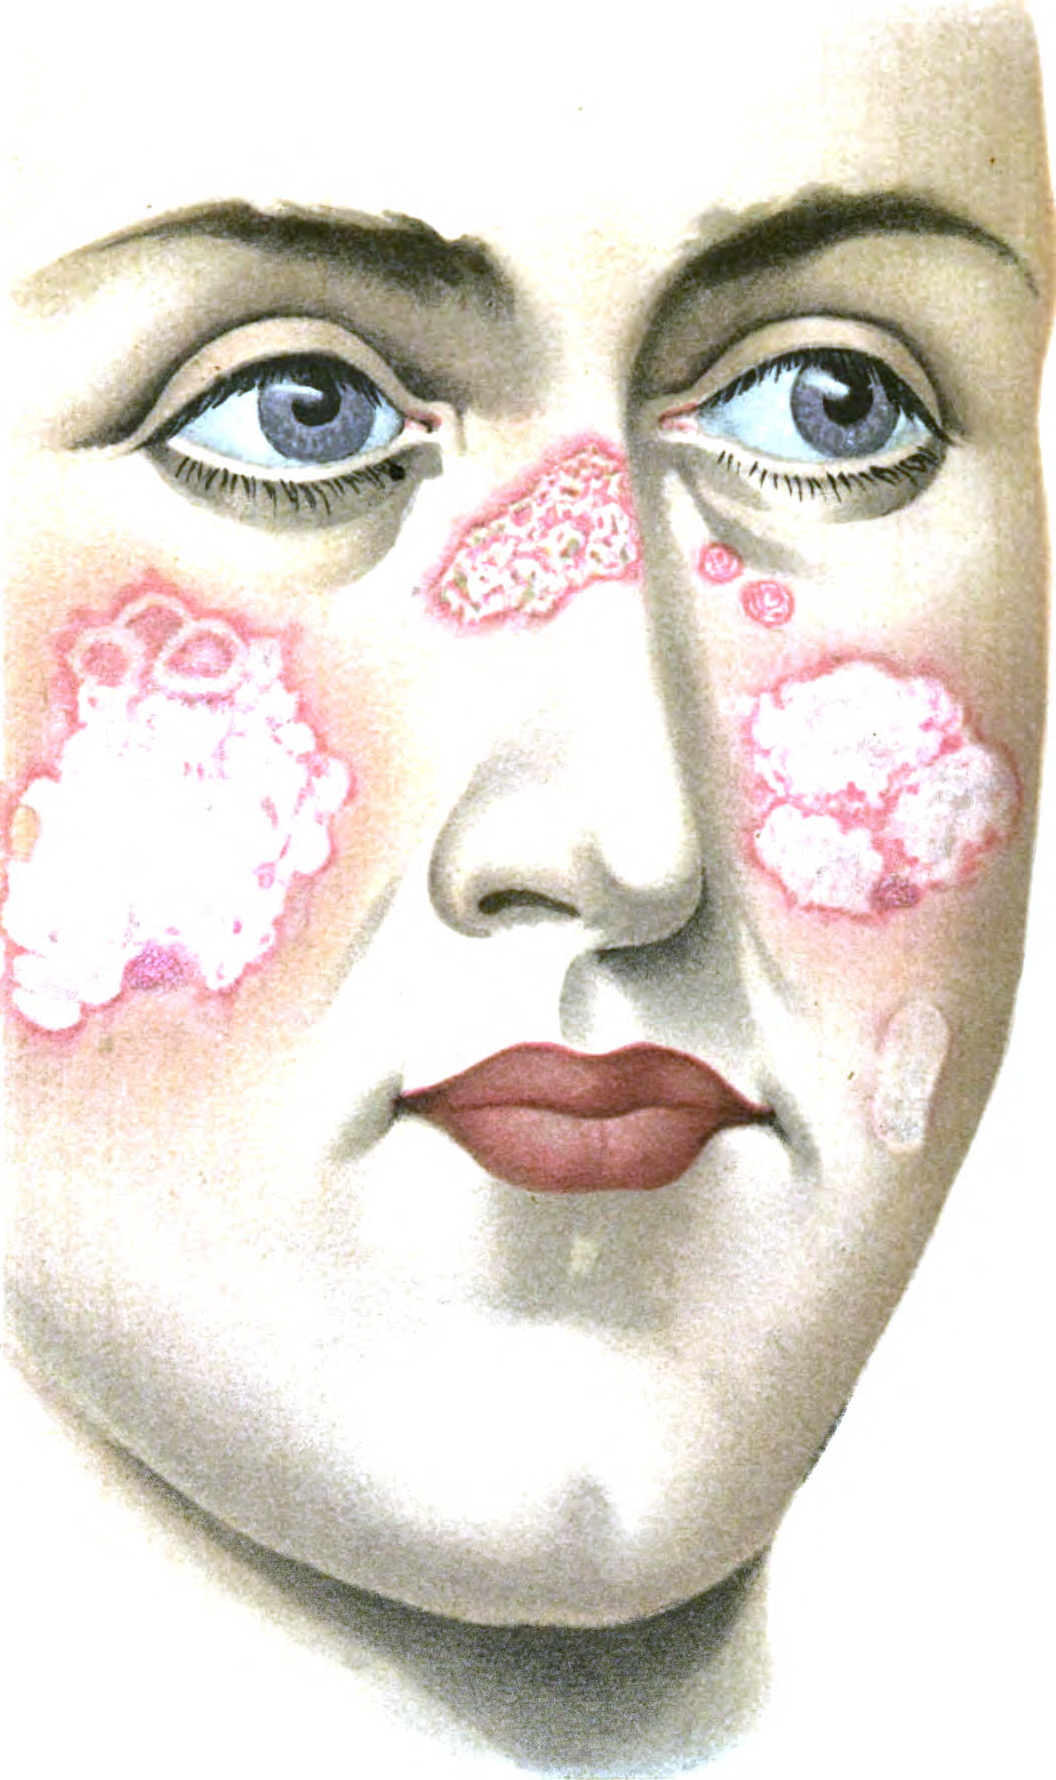 An introduction to dermatology (1905) lupus erythematosus 2.jpg